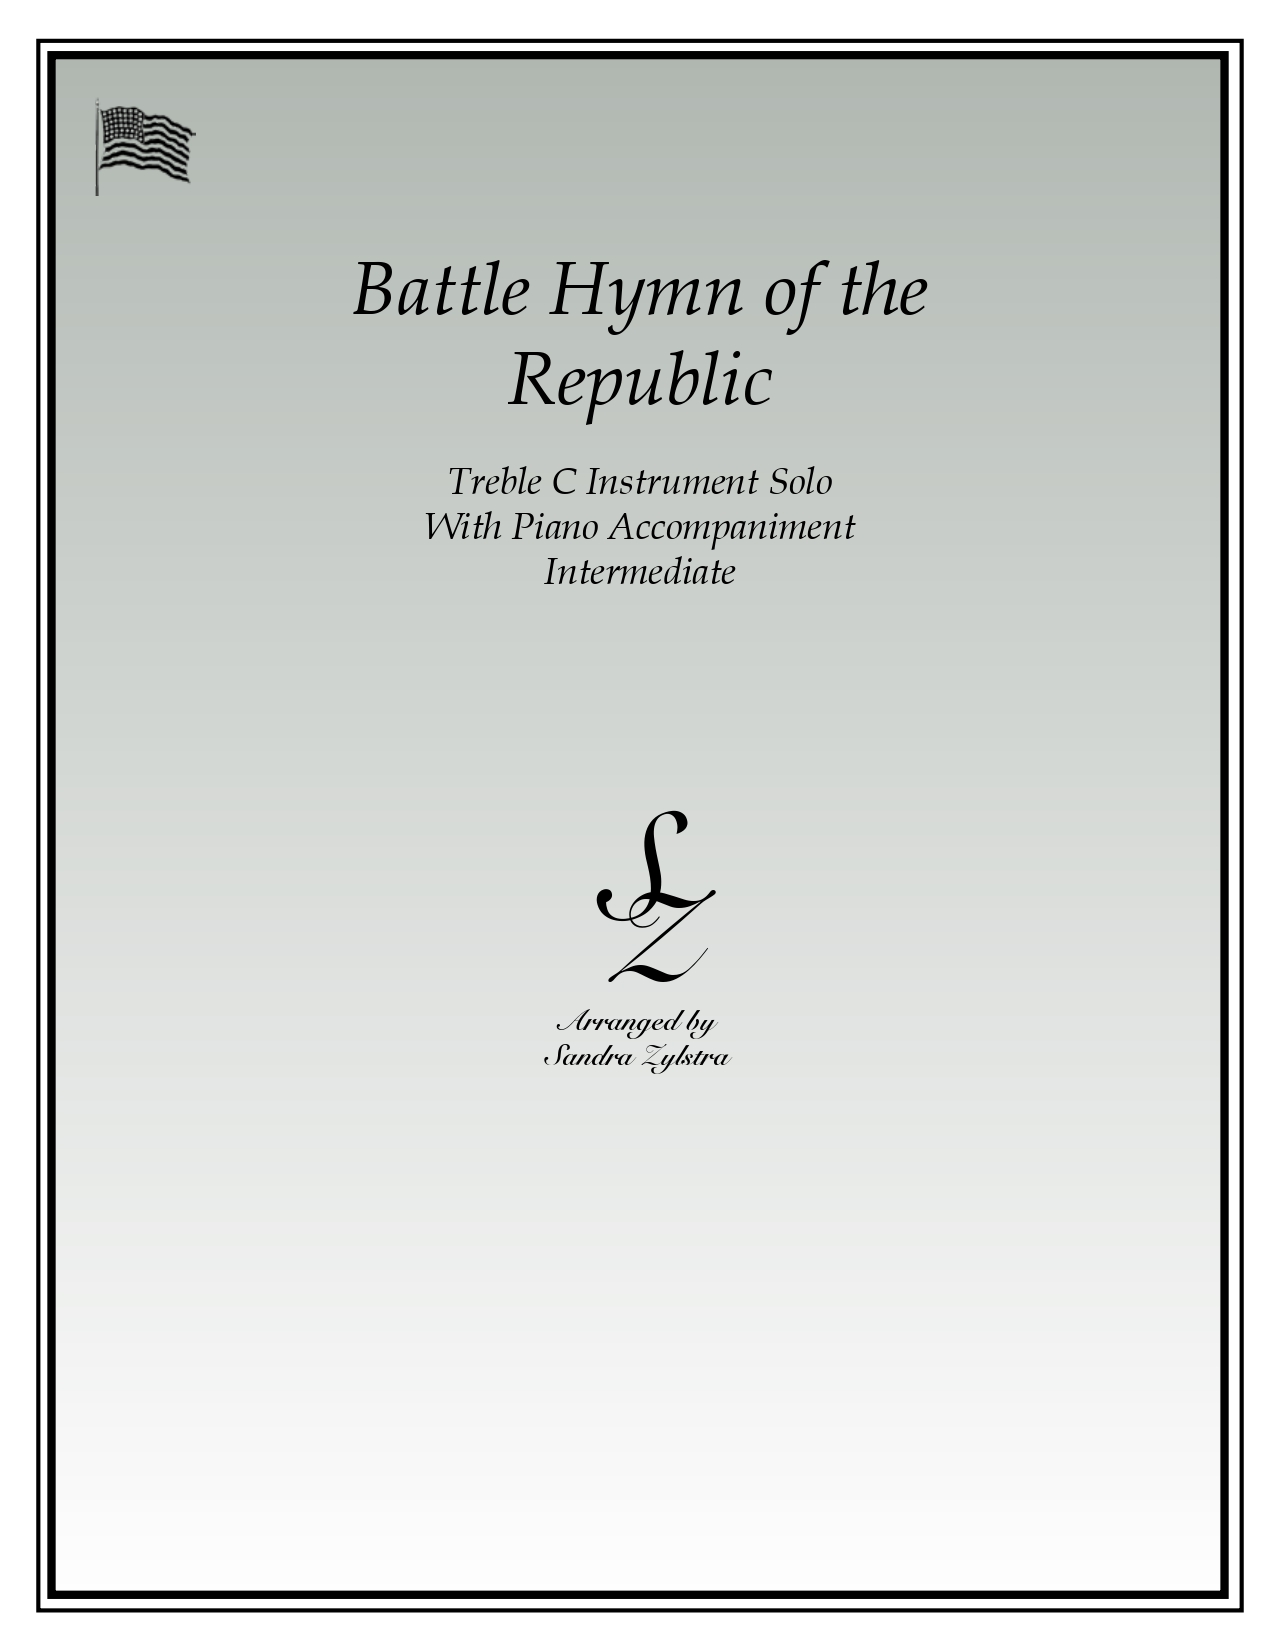 Battle Hymn Of The Republic treble C instrument solo part cover page 00011